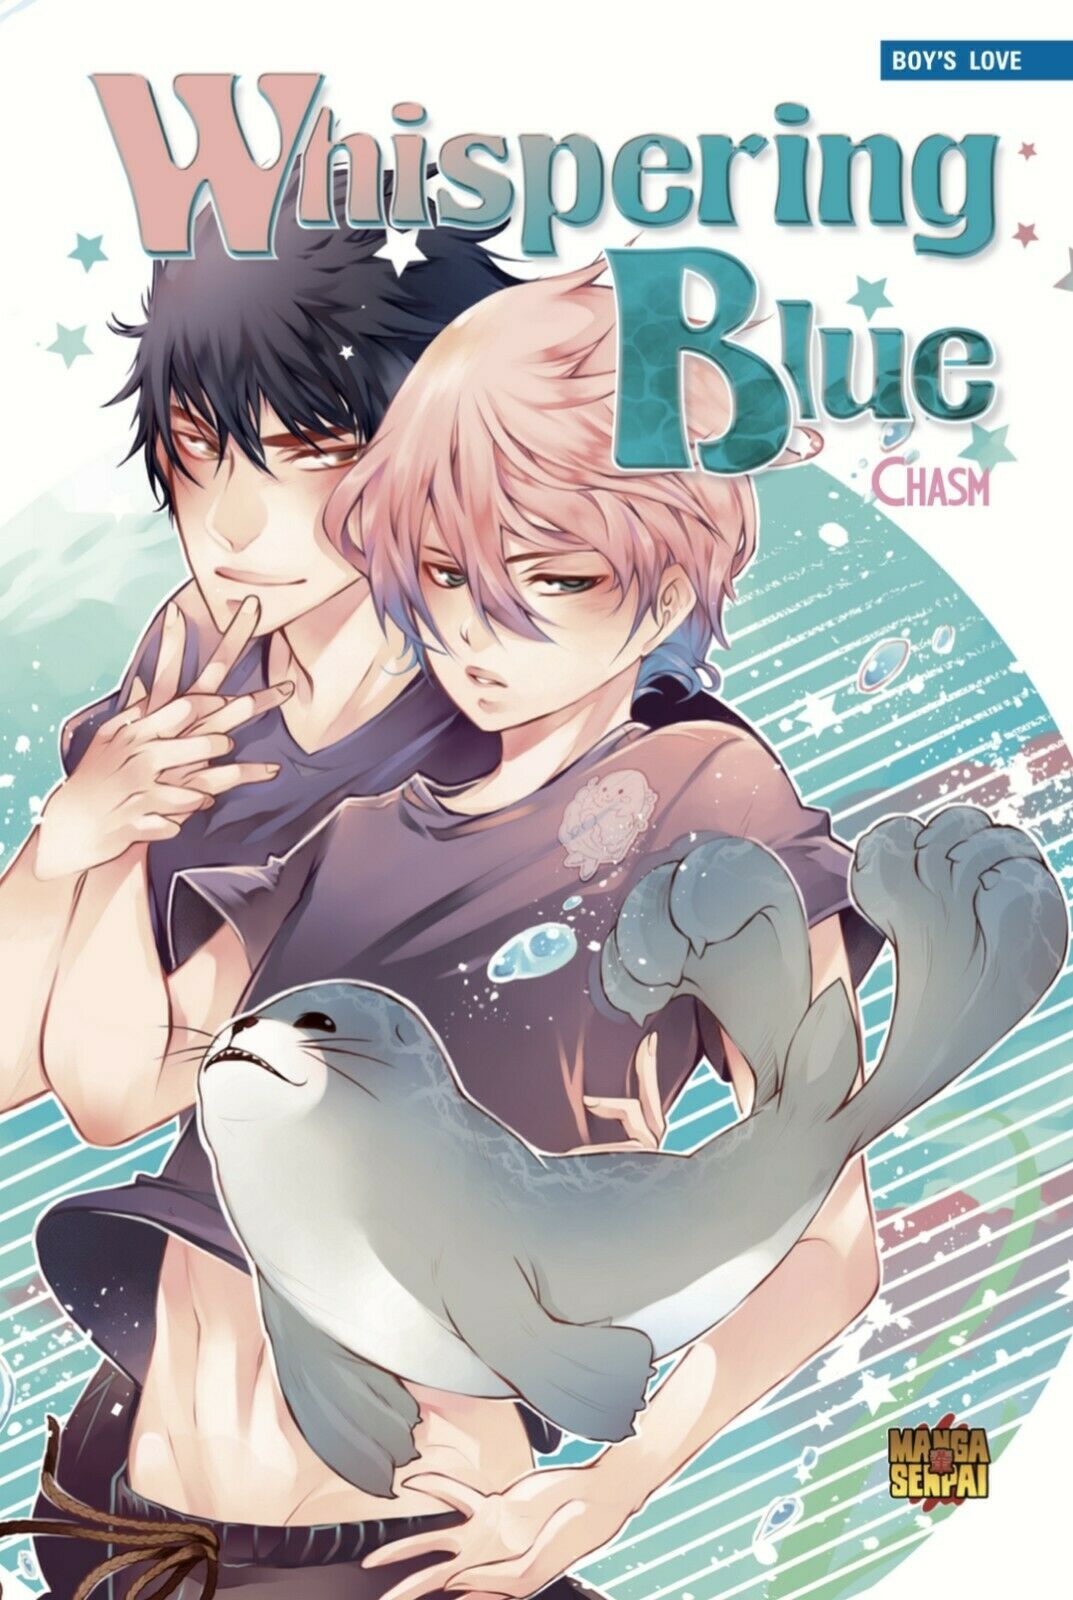 Whispering Blue (volume unico)  di Marika Herzog (chasm),  Manga Senpai